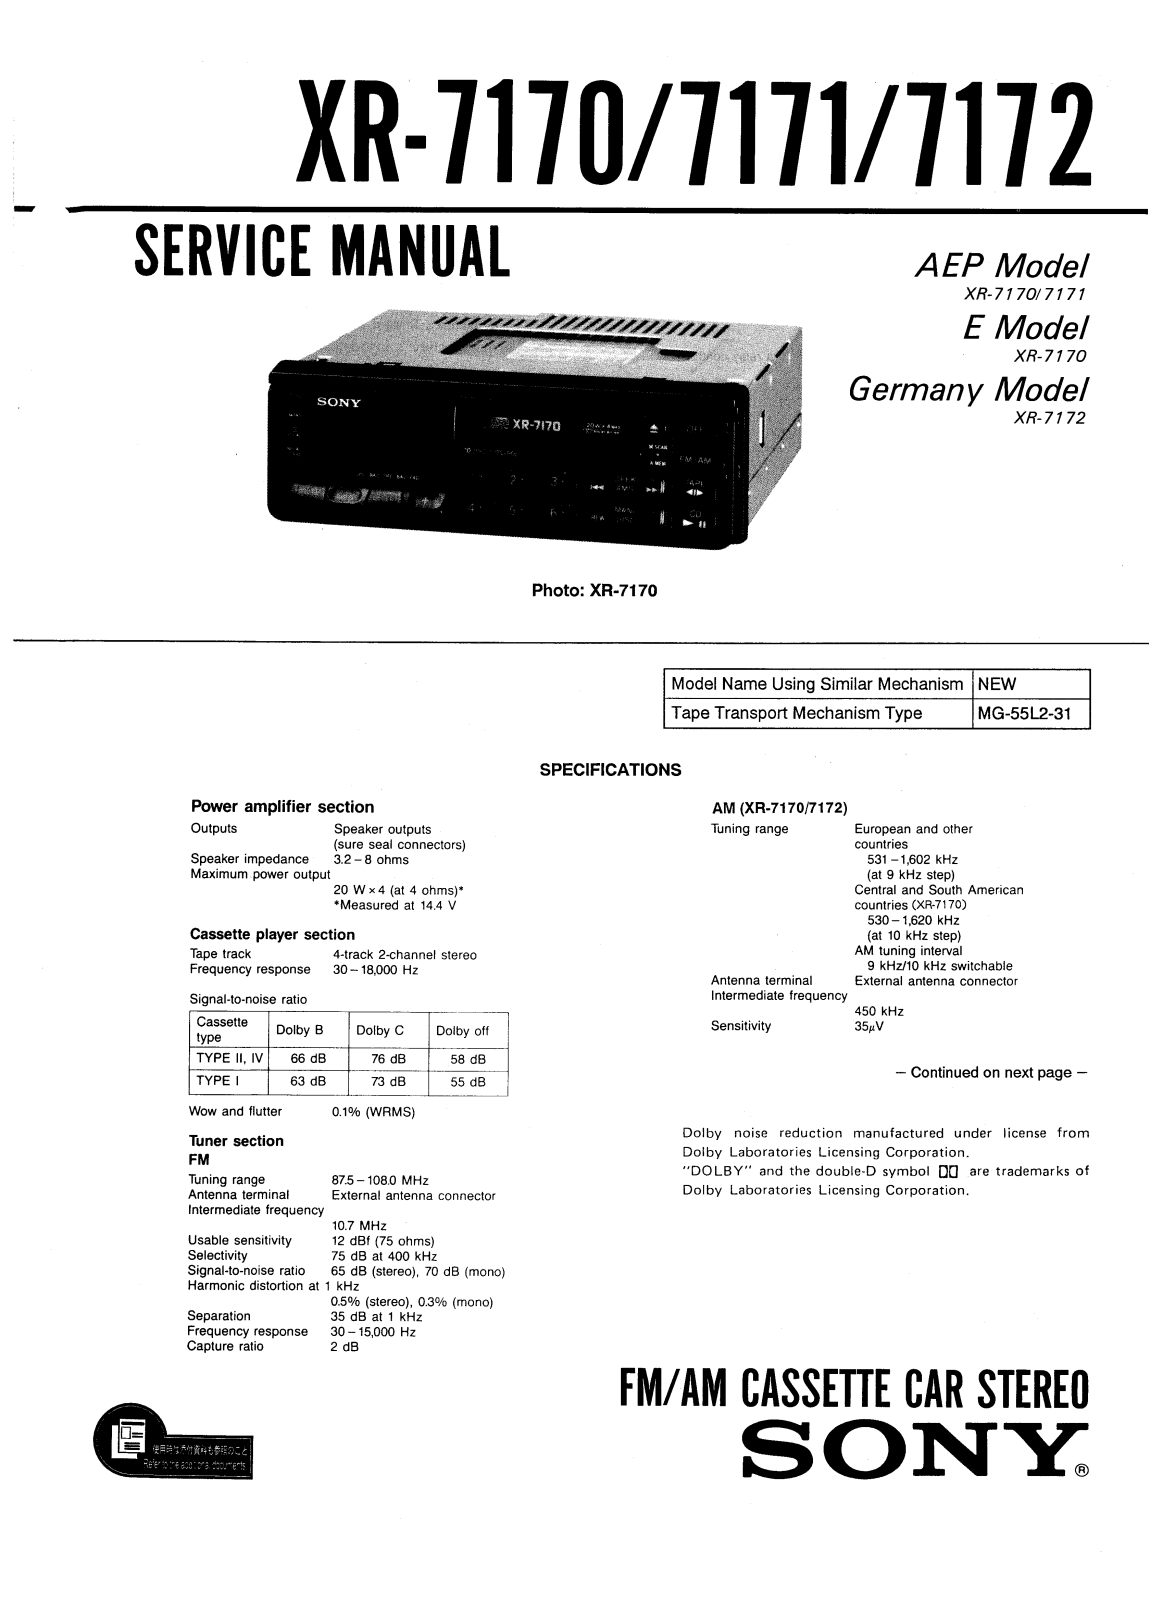 SONY XR-7170, XR-7171, XR-7172 Service Manual